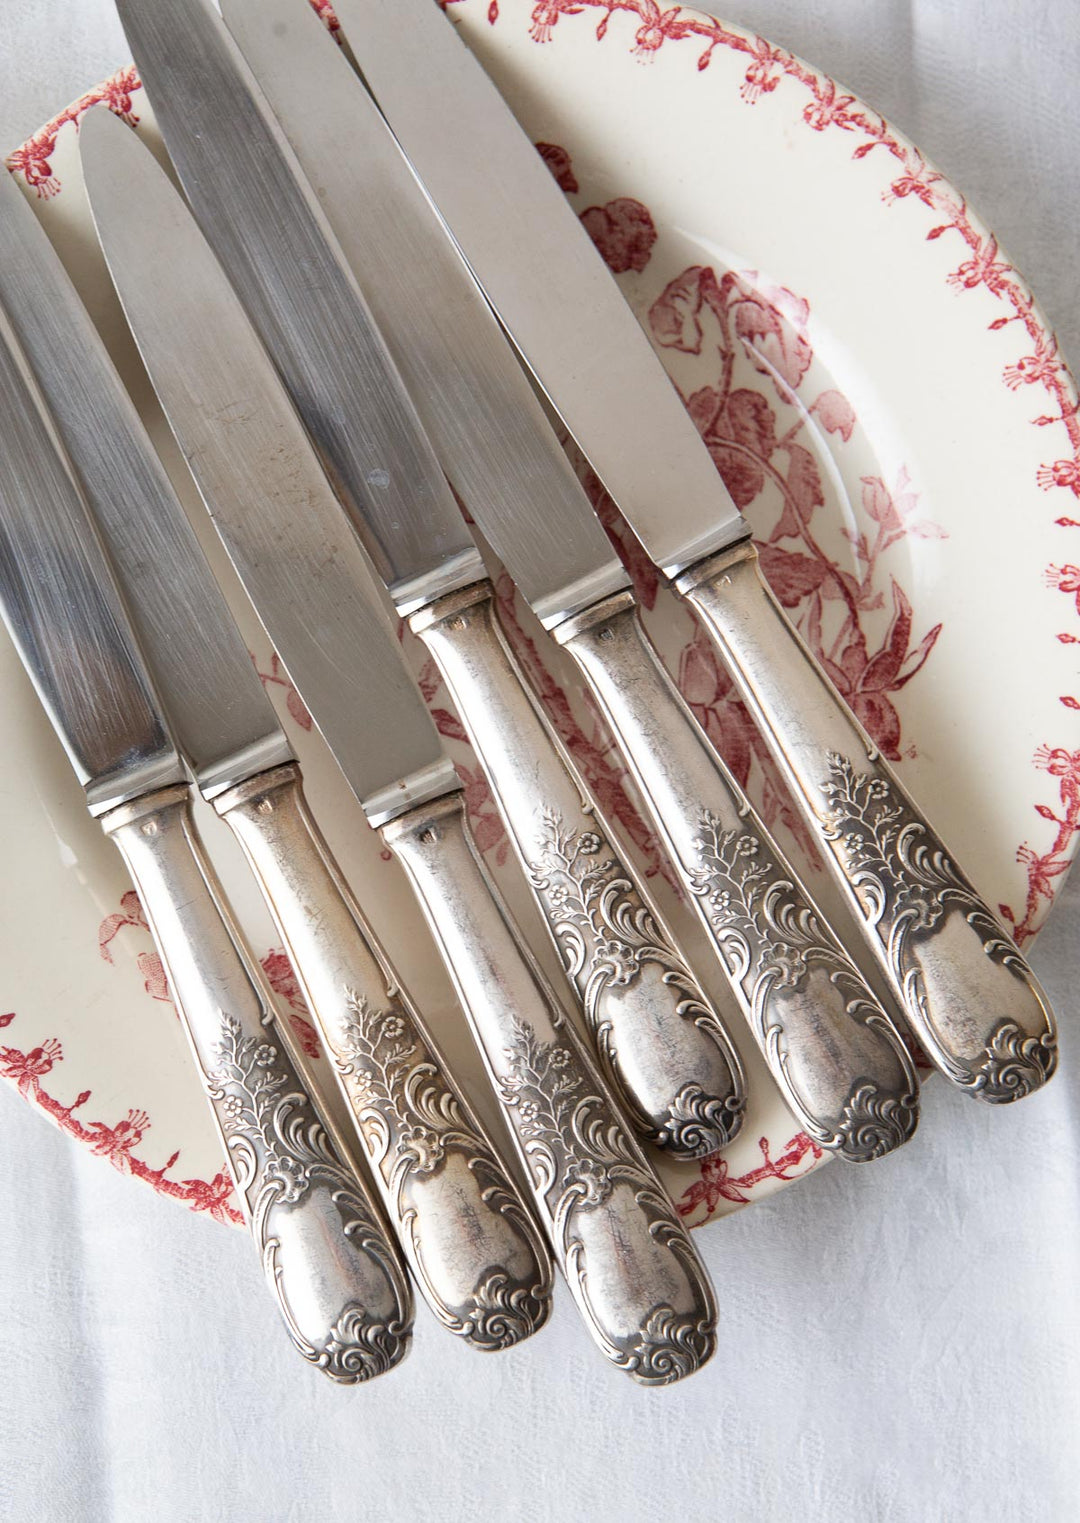 antiguos cuchillos franceses metal plateado french knives